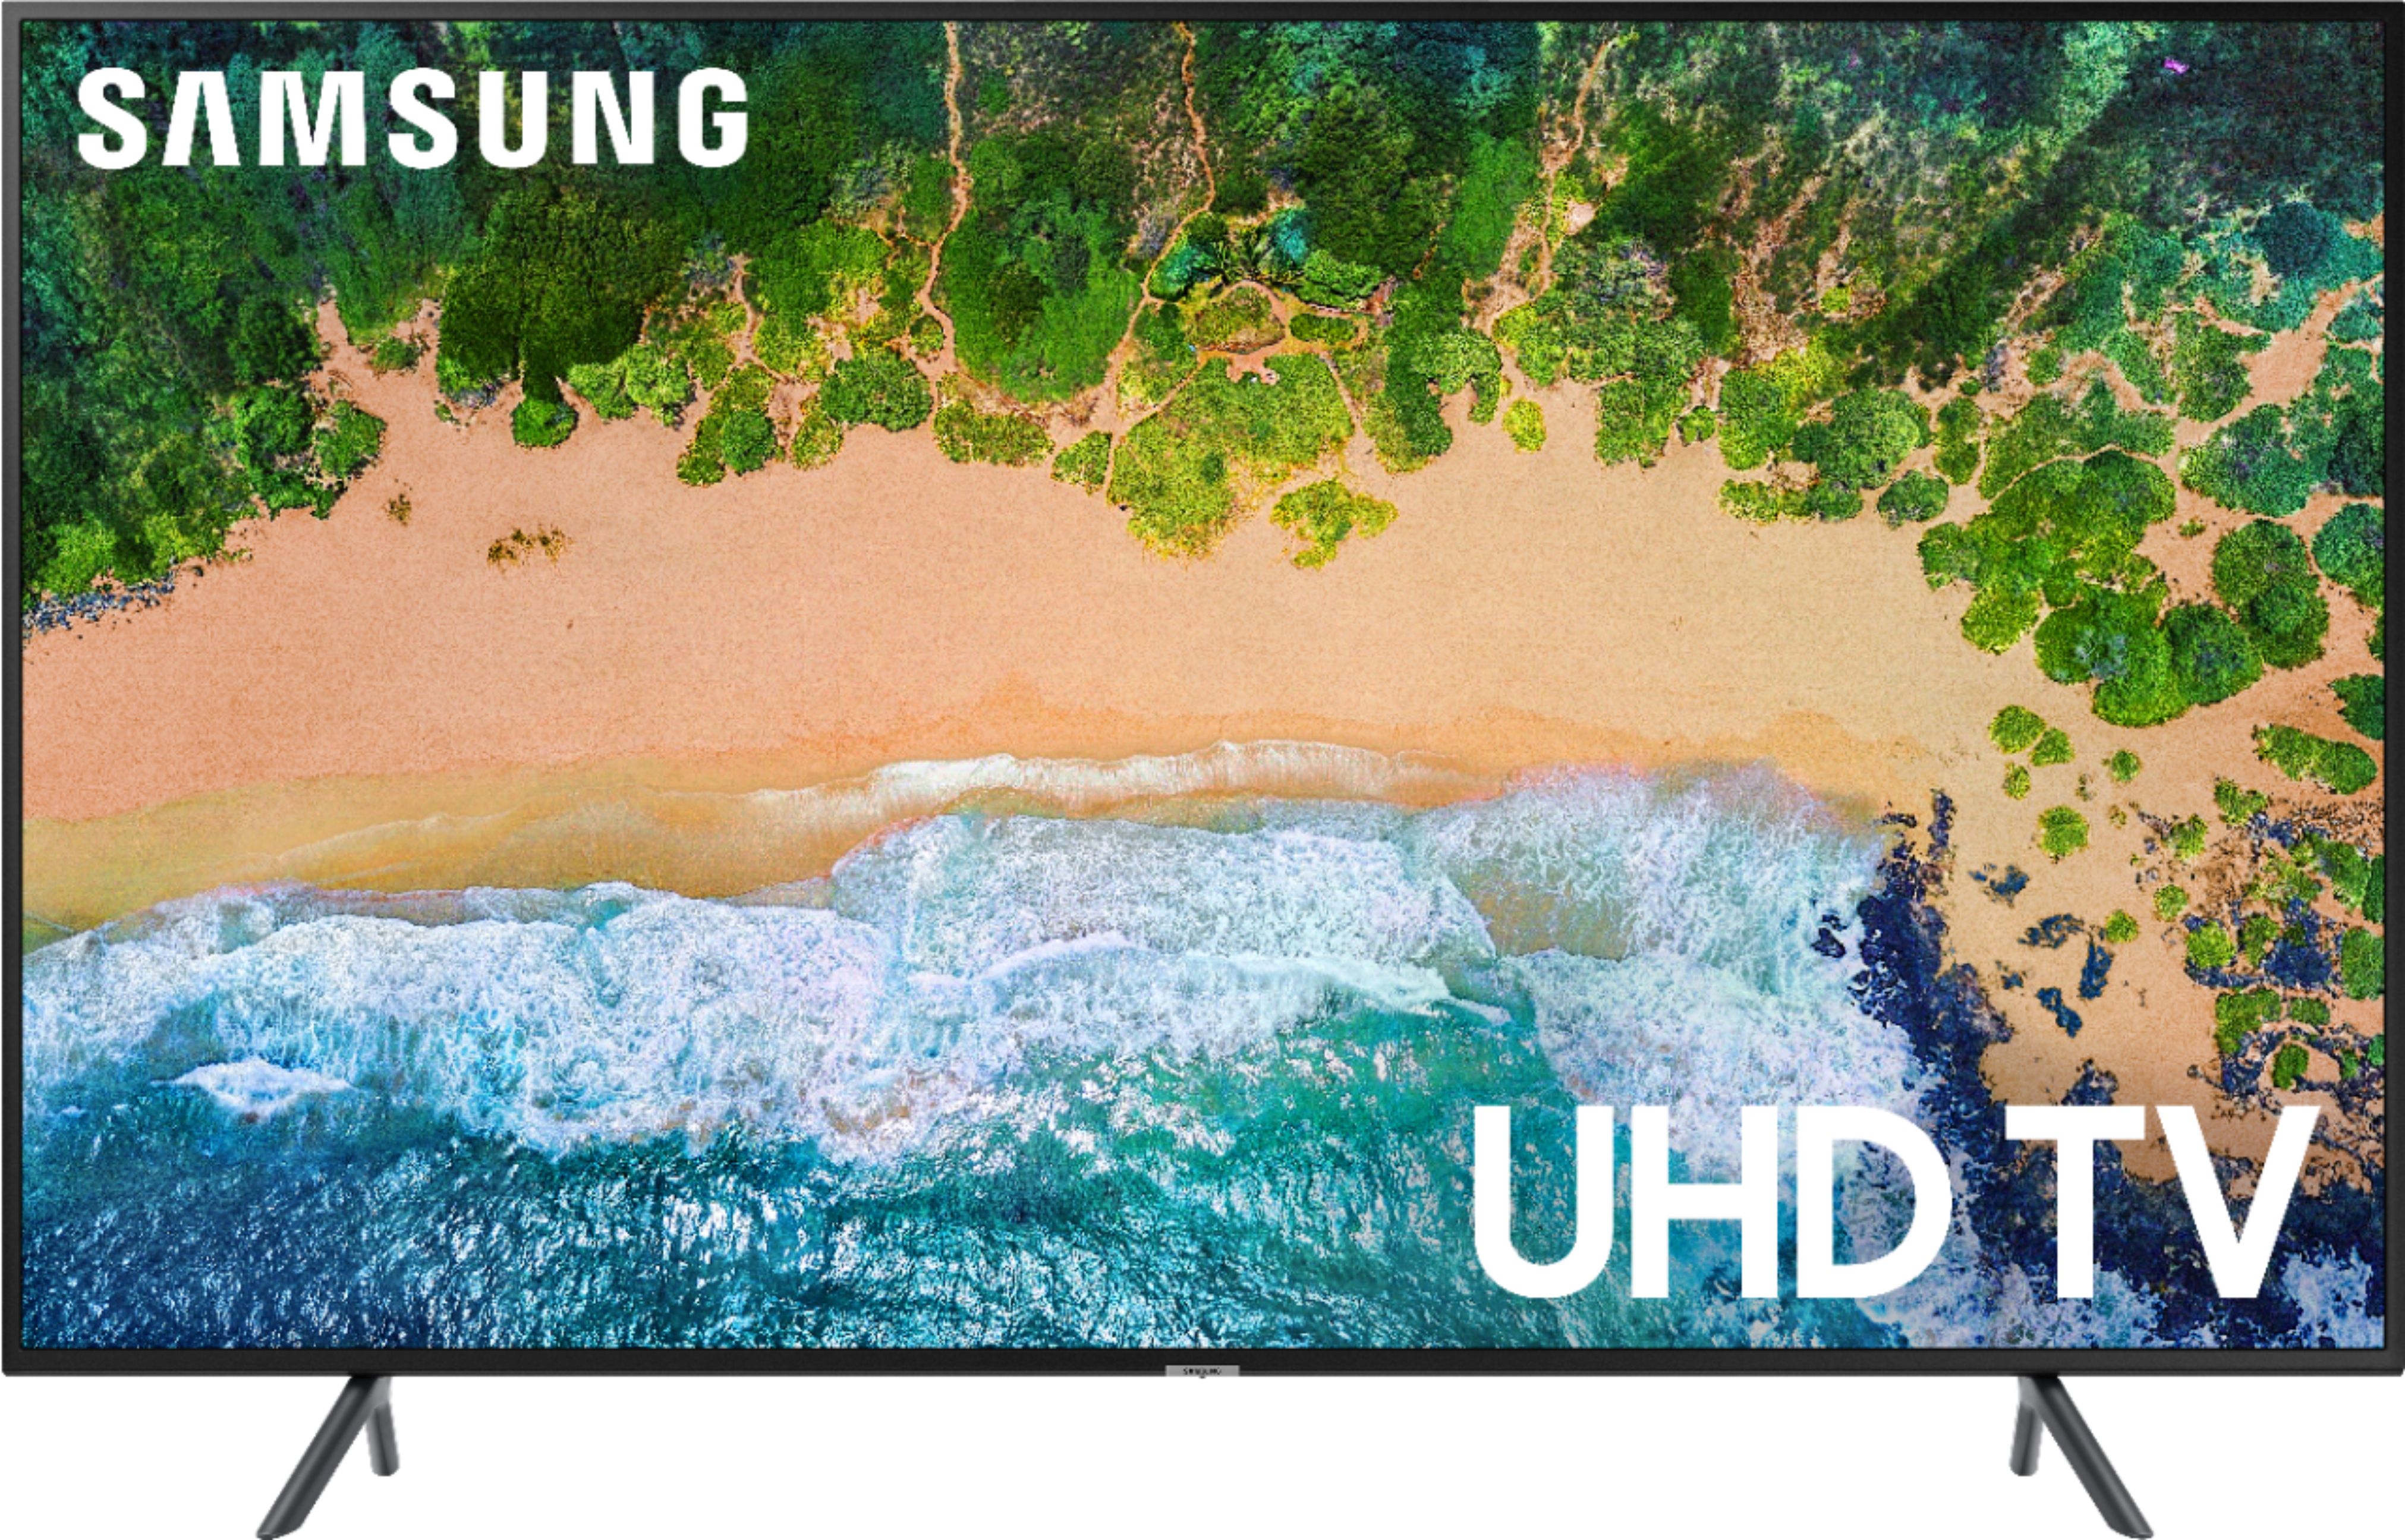 Best Buy Samsung 75" Class LED NU7100 Series 2160p Smart 4K UHD TV